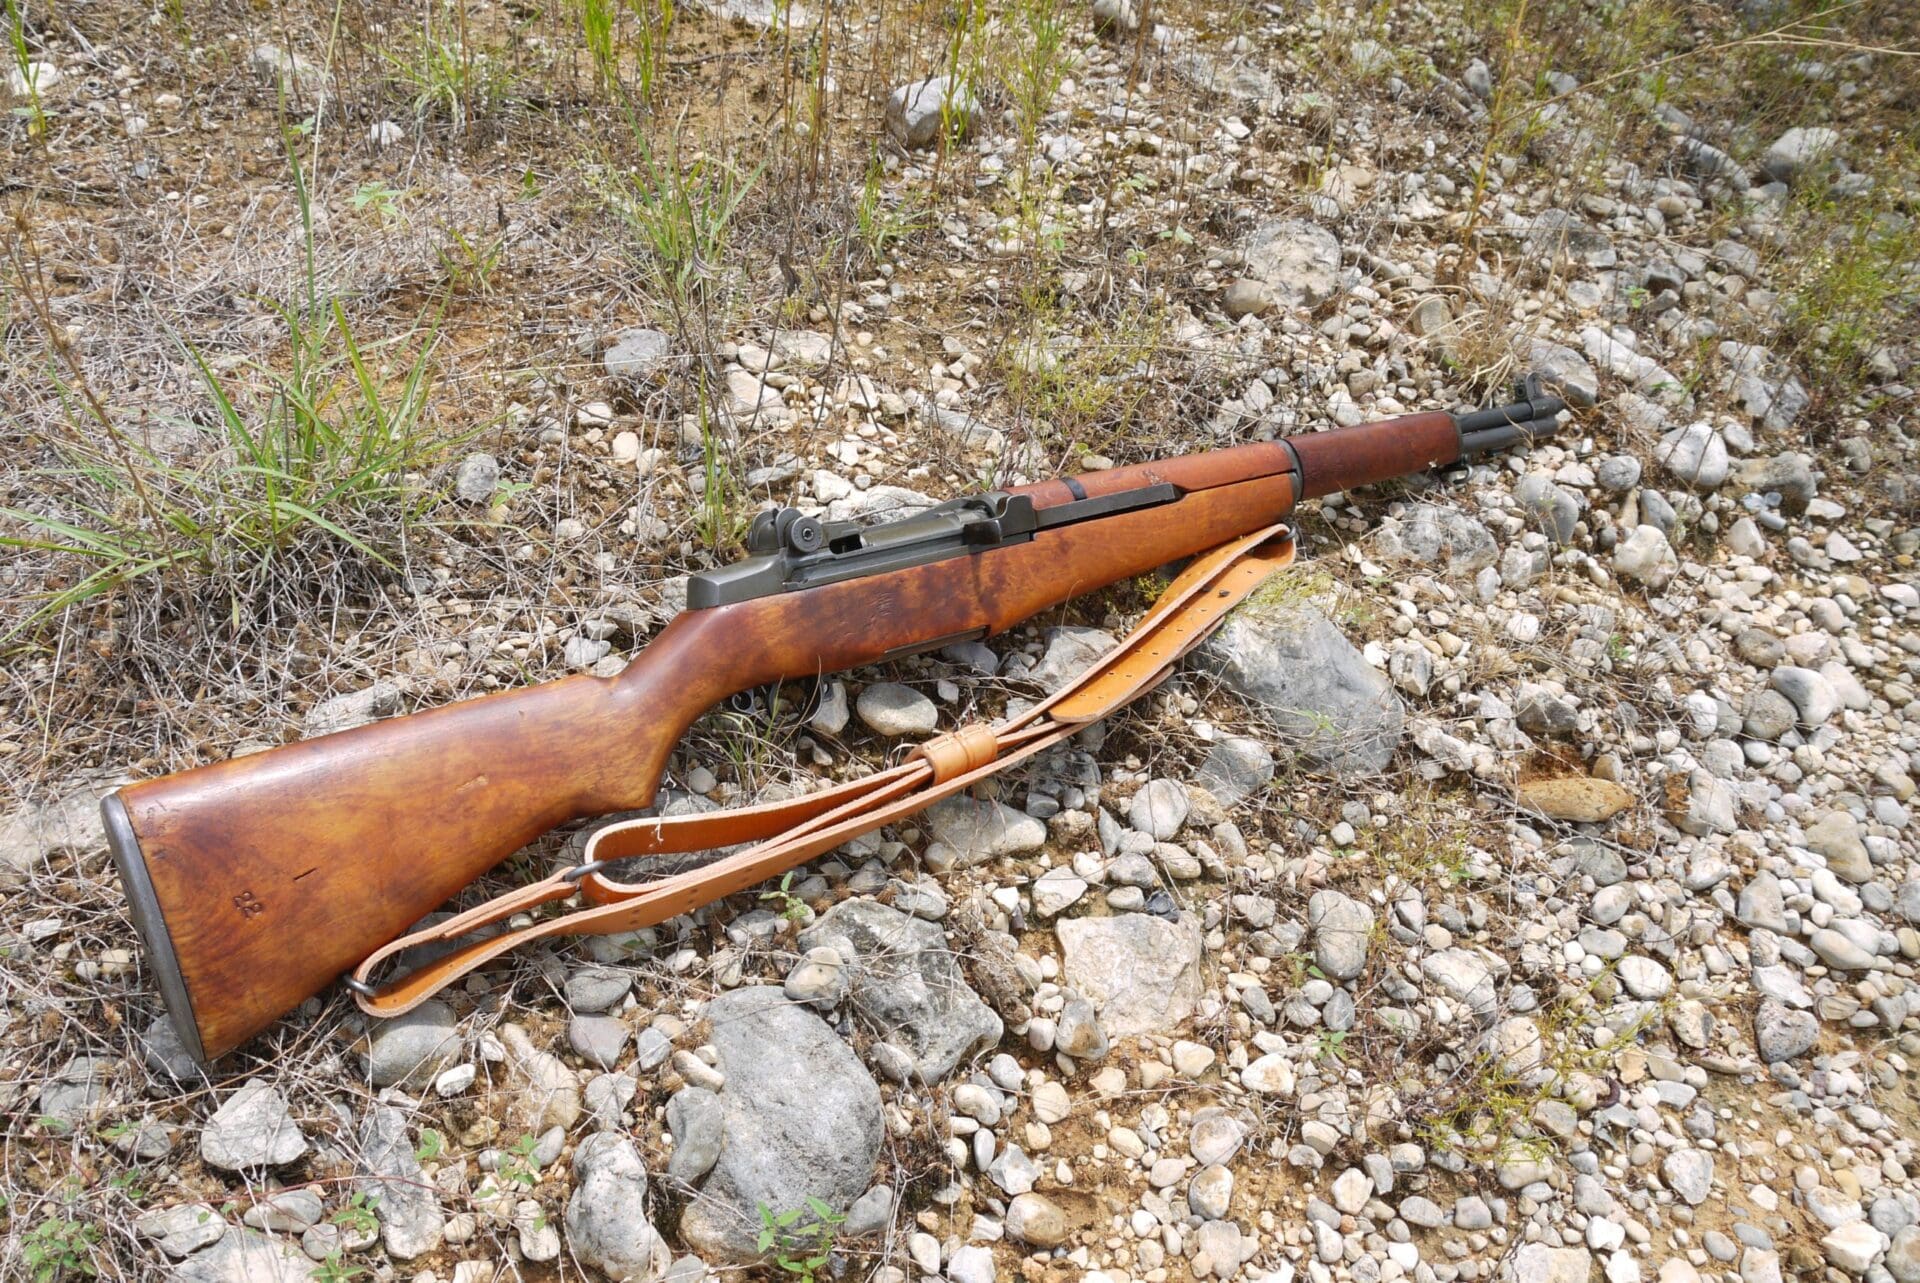 m1 carbine rifle